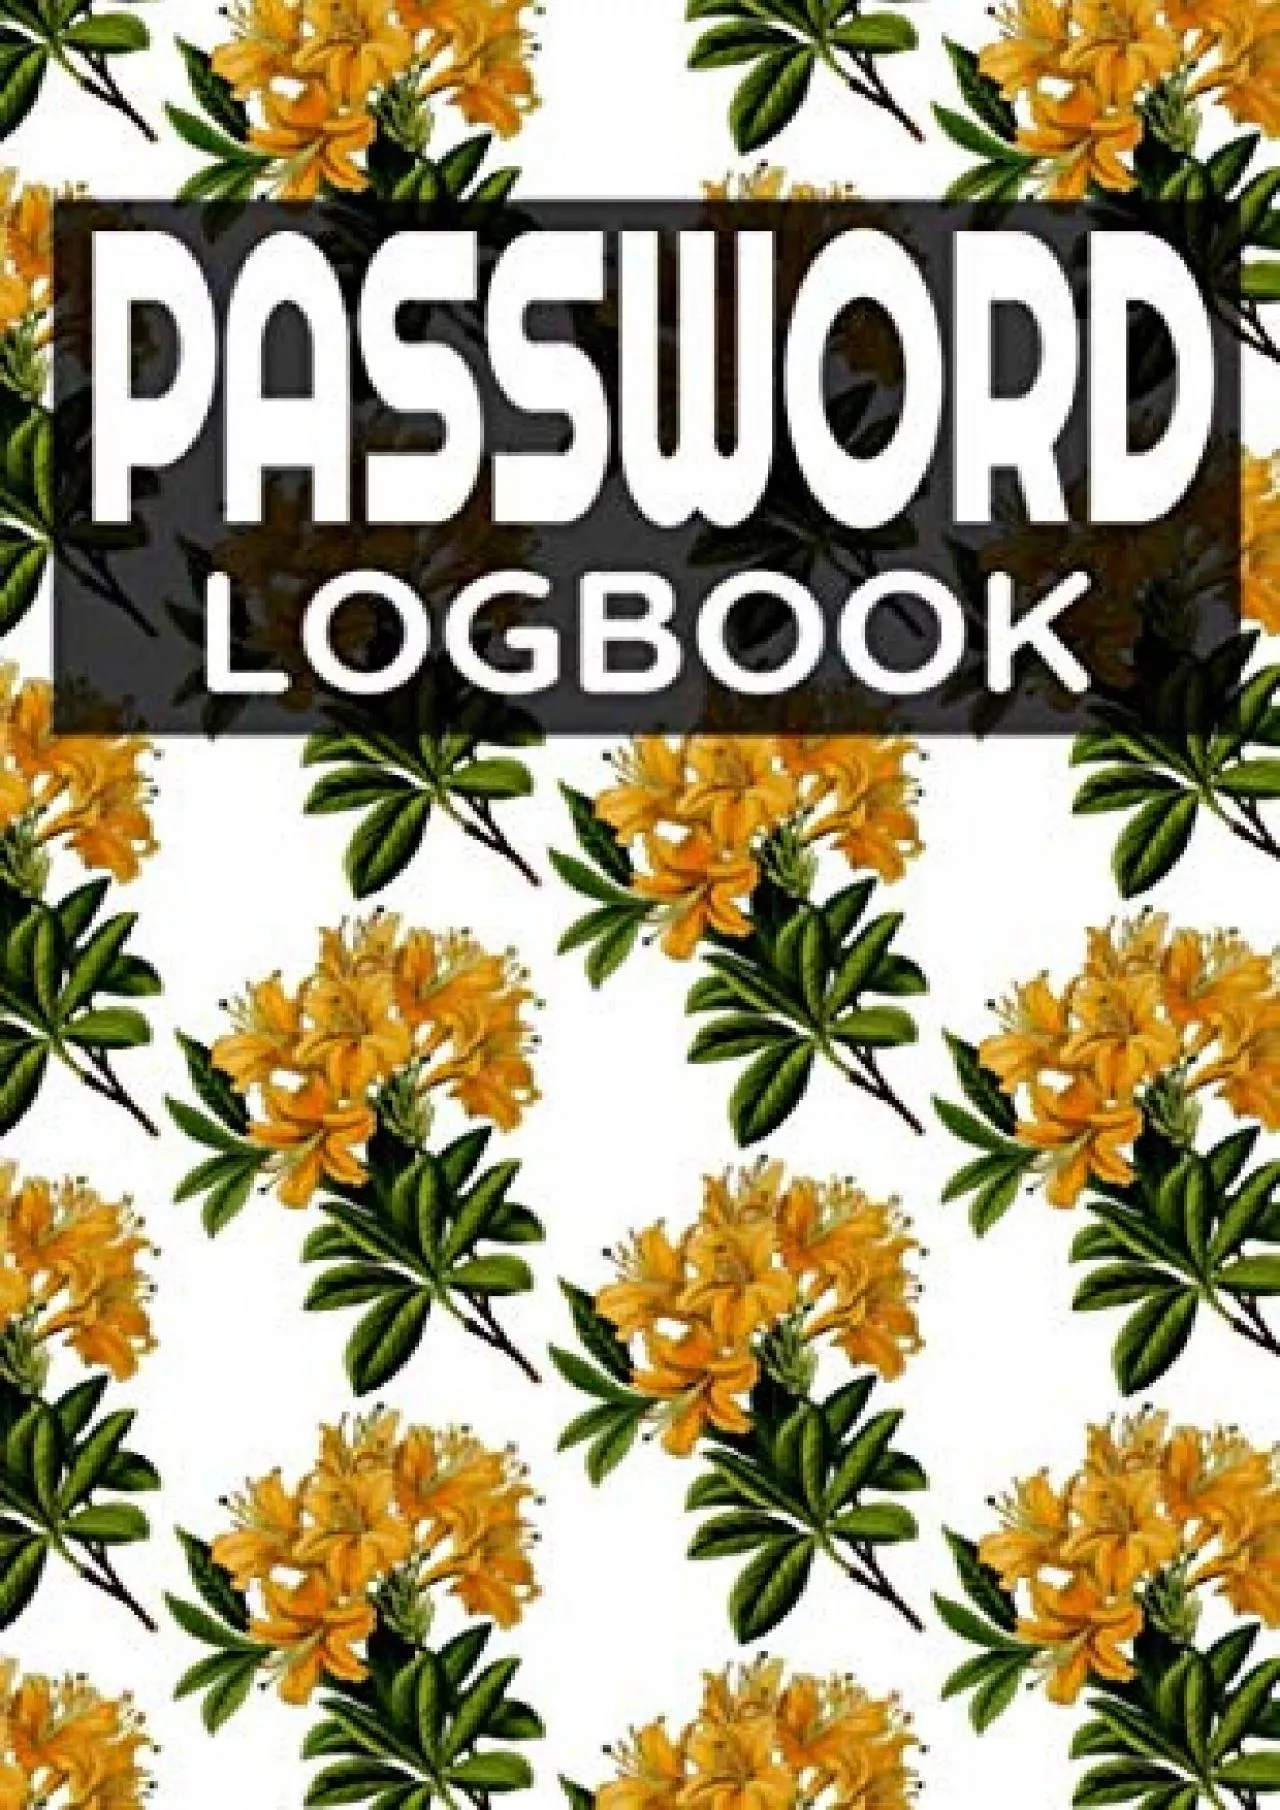 [BEST]-Password Logbook: Internet Alphabetical Password Organizer - 6\' x 9\' Password